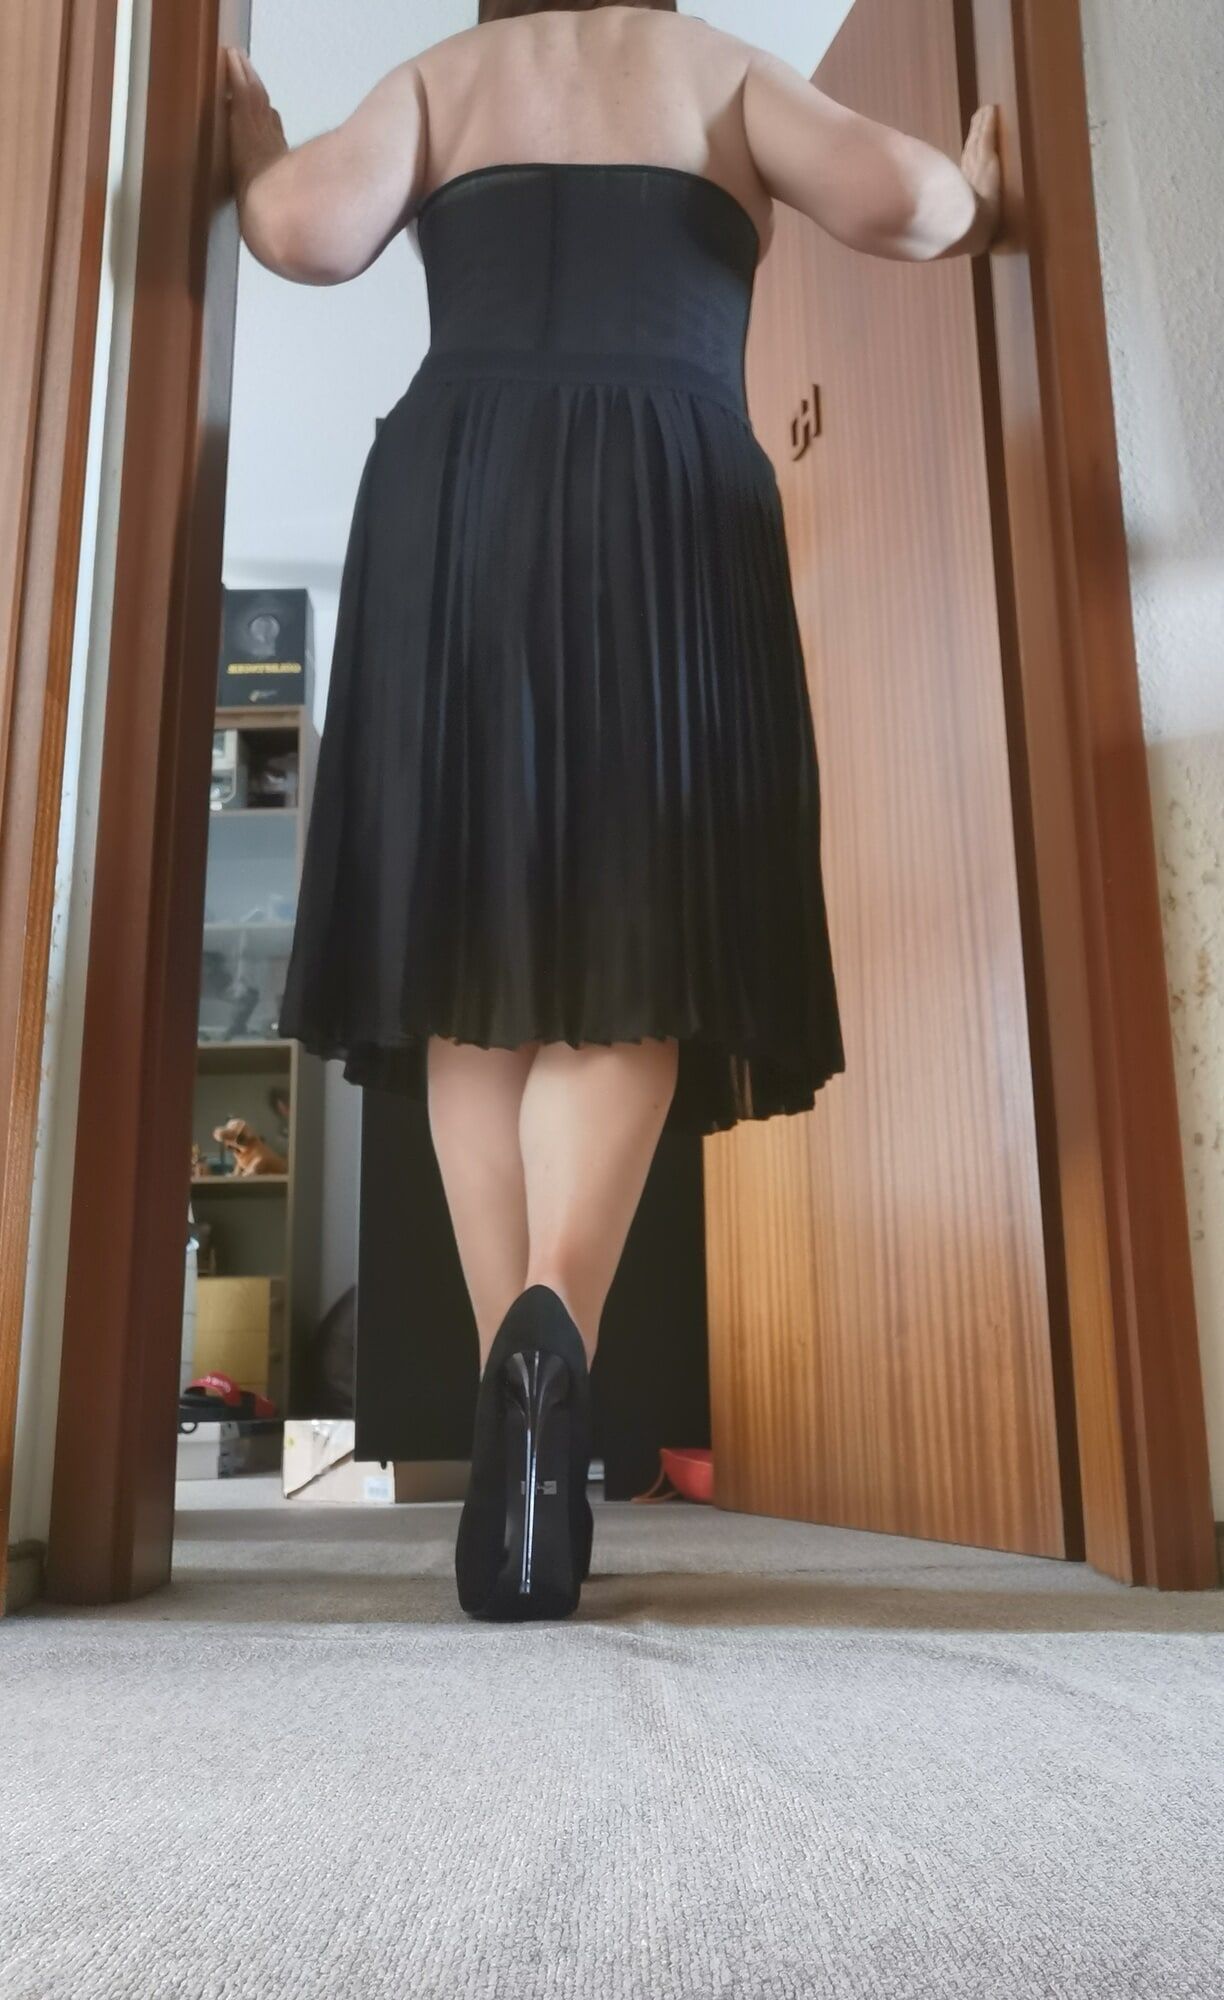 Posing Sexy Wearing Black Skirt, Platform Heels And Wig #5